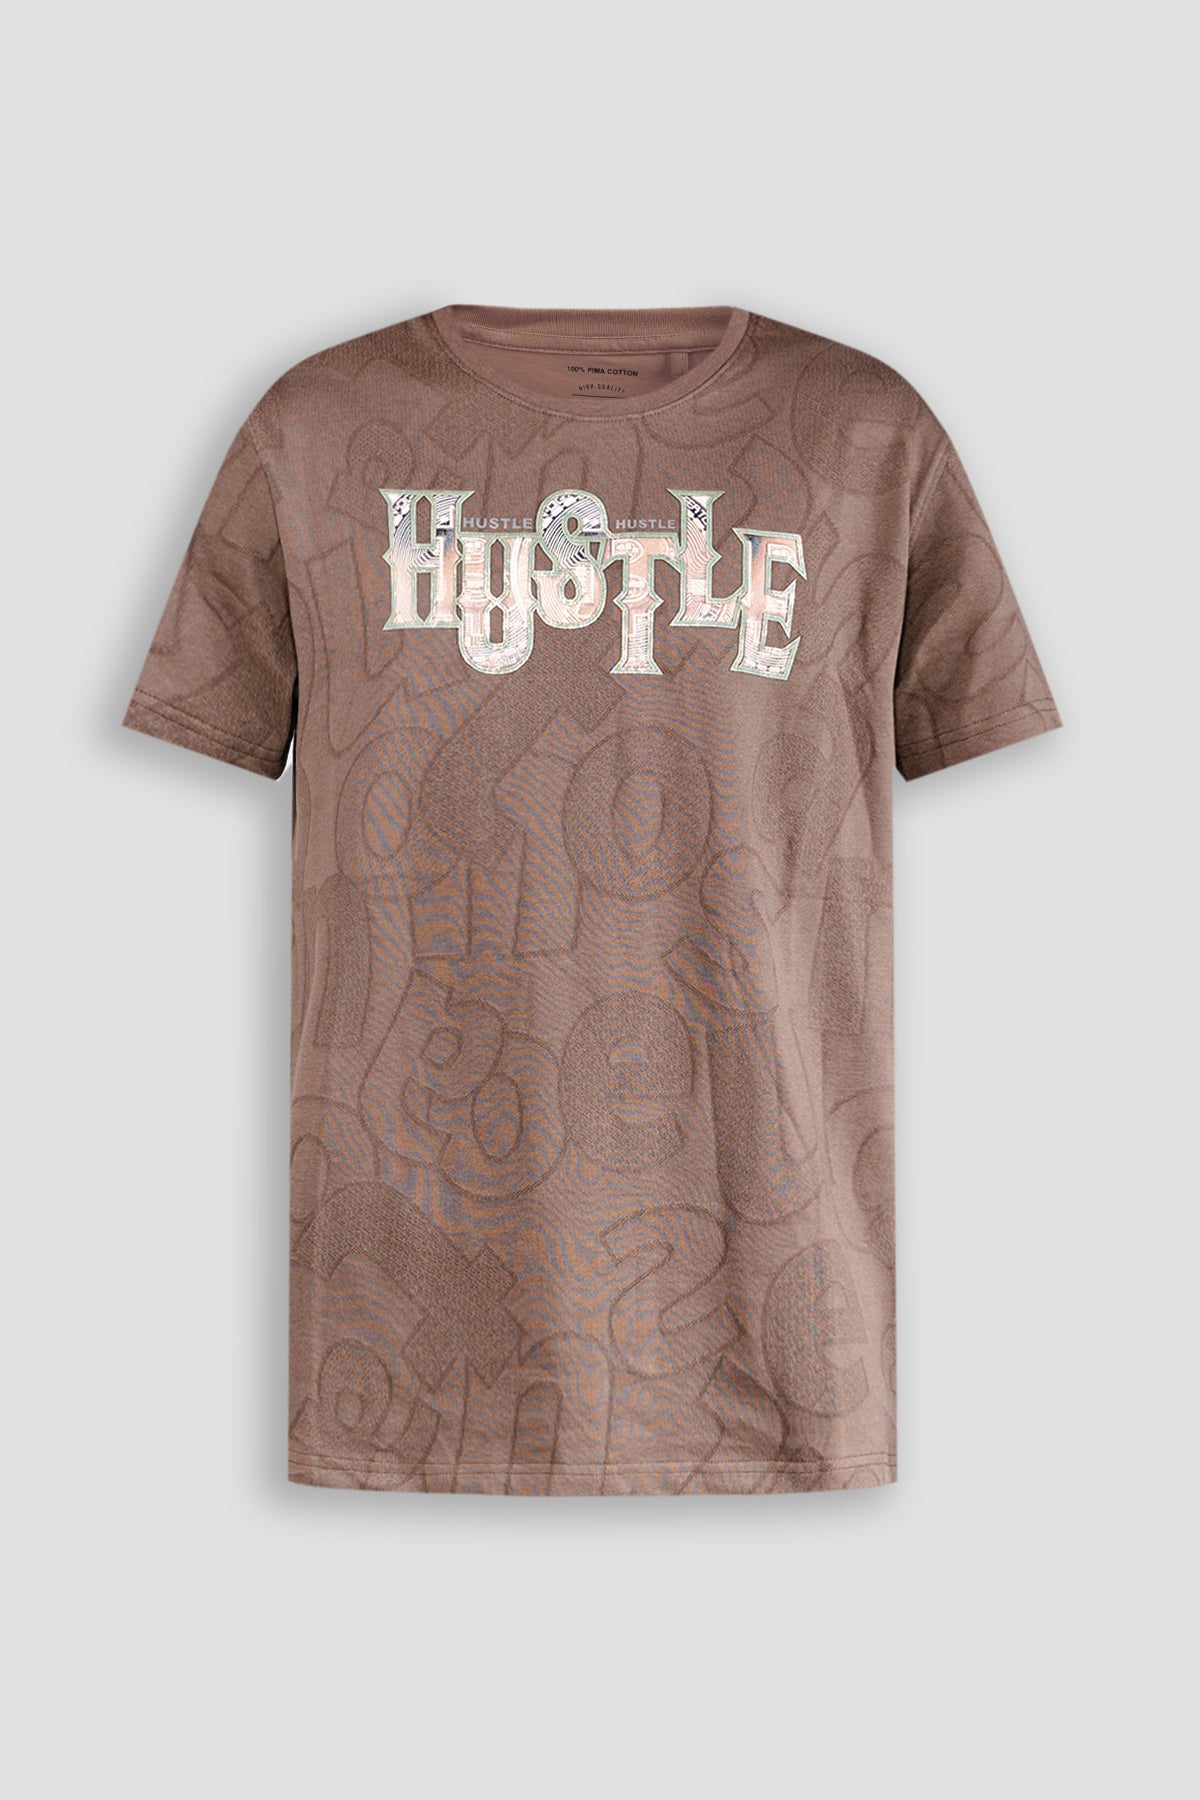 "Hustle" Graphic Tee